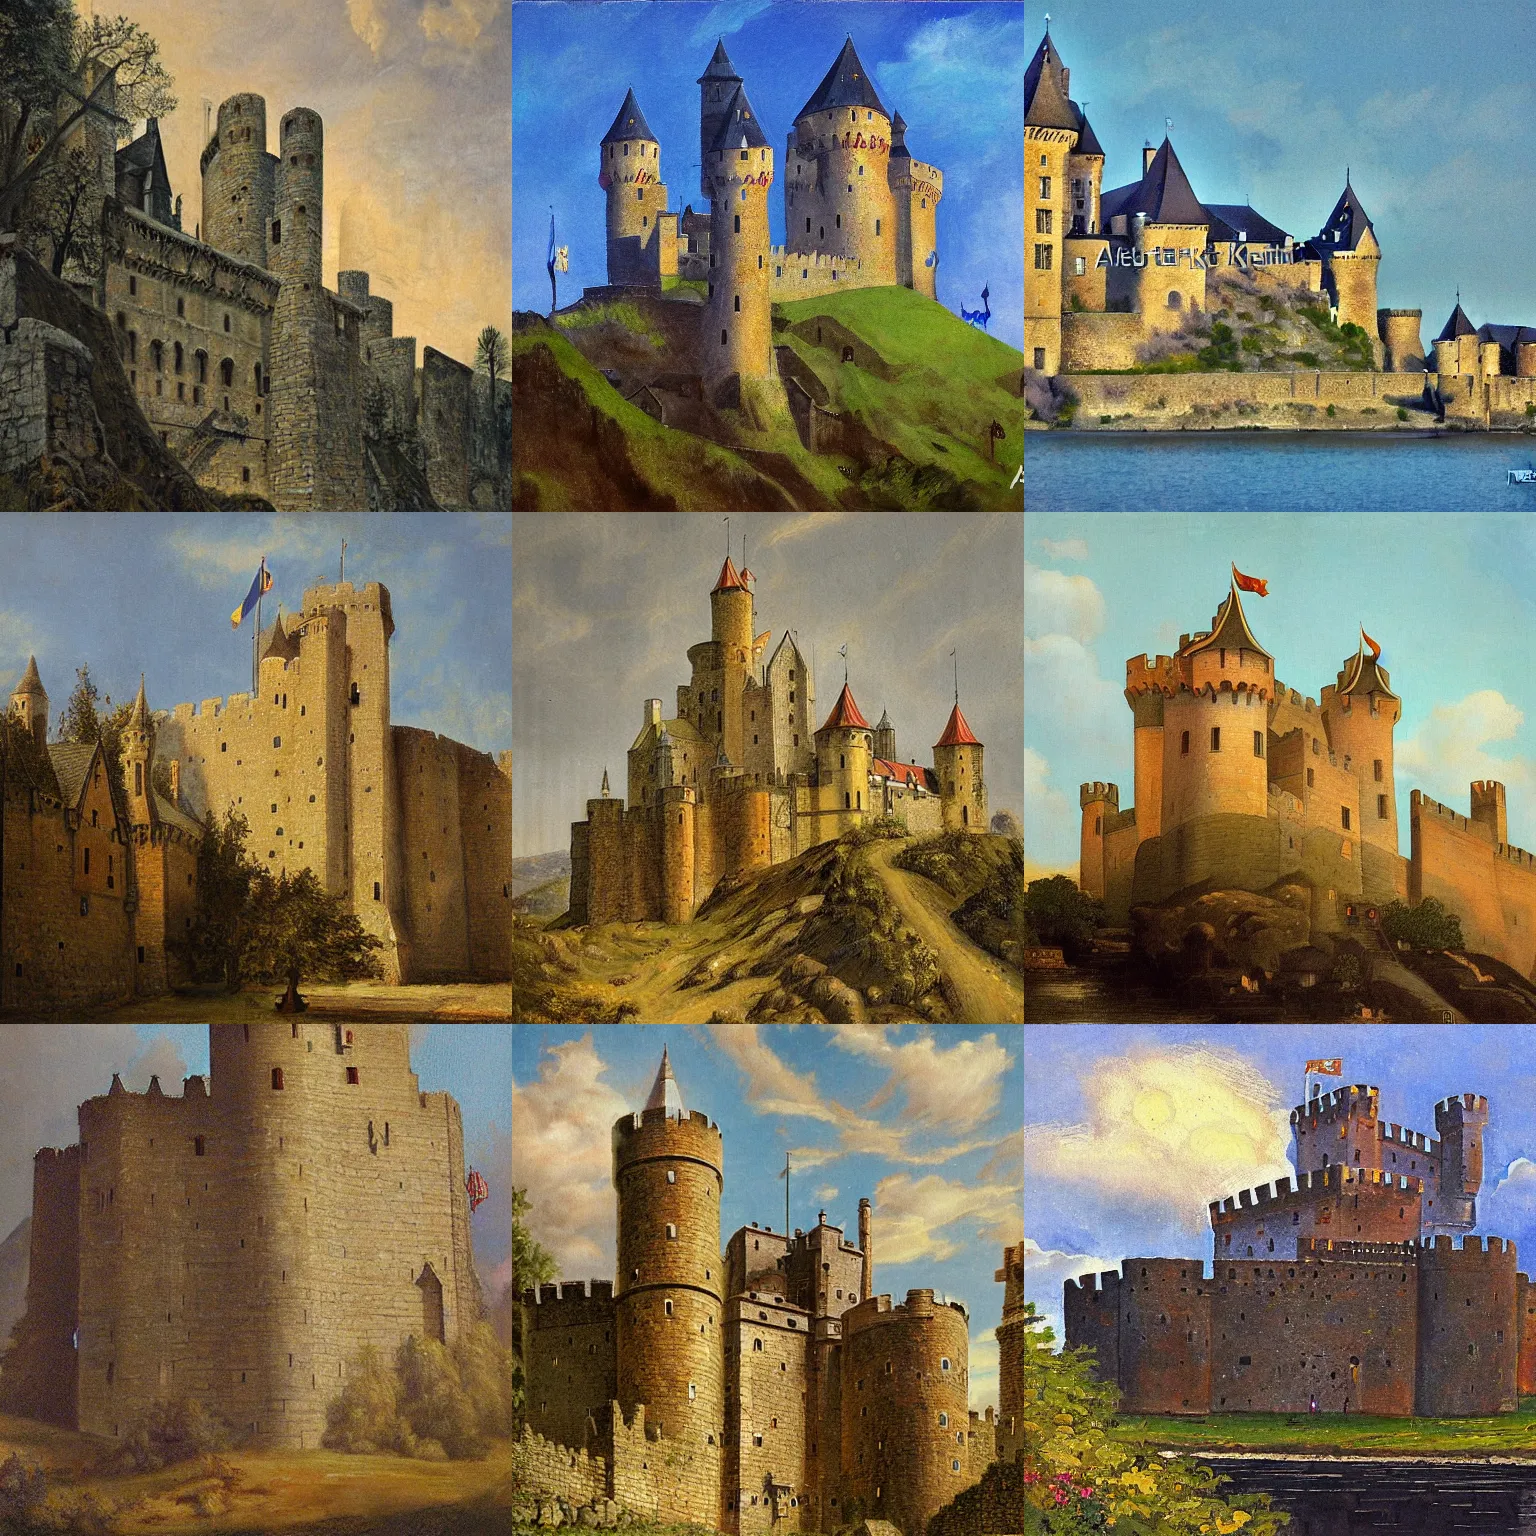 Prompt: medieval castle, by albert kotin